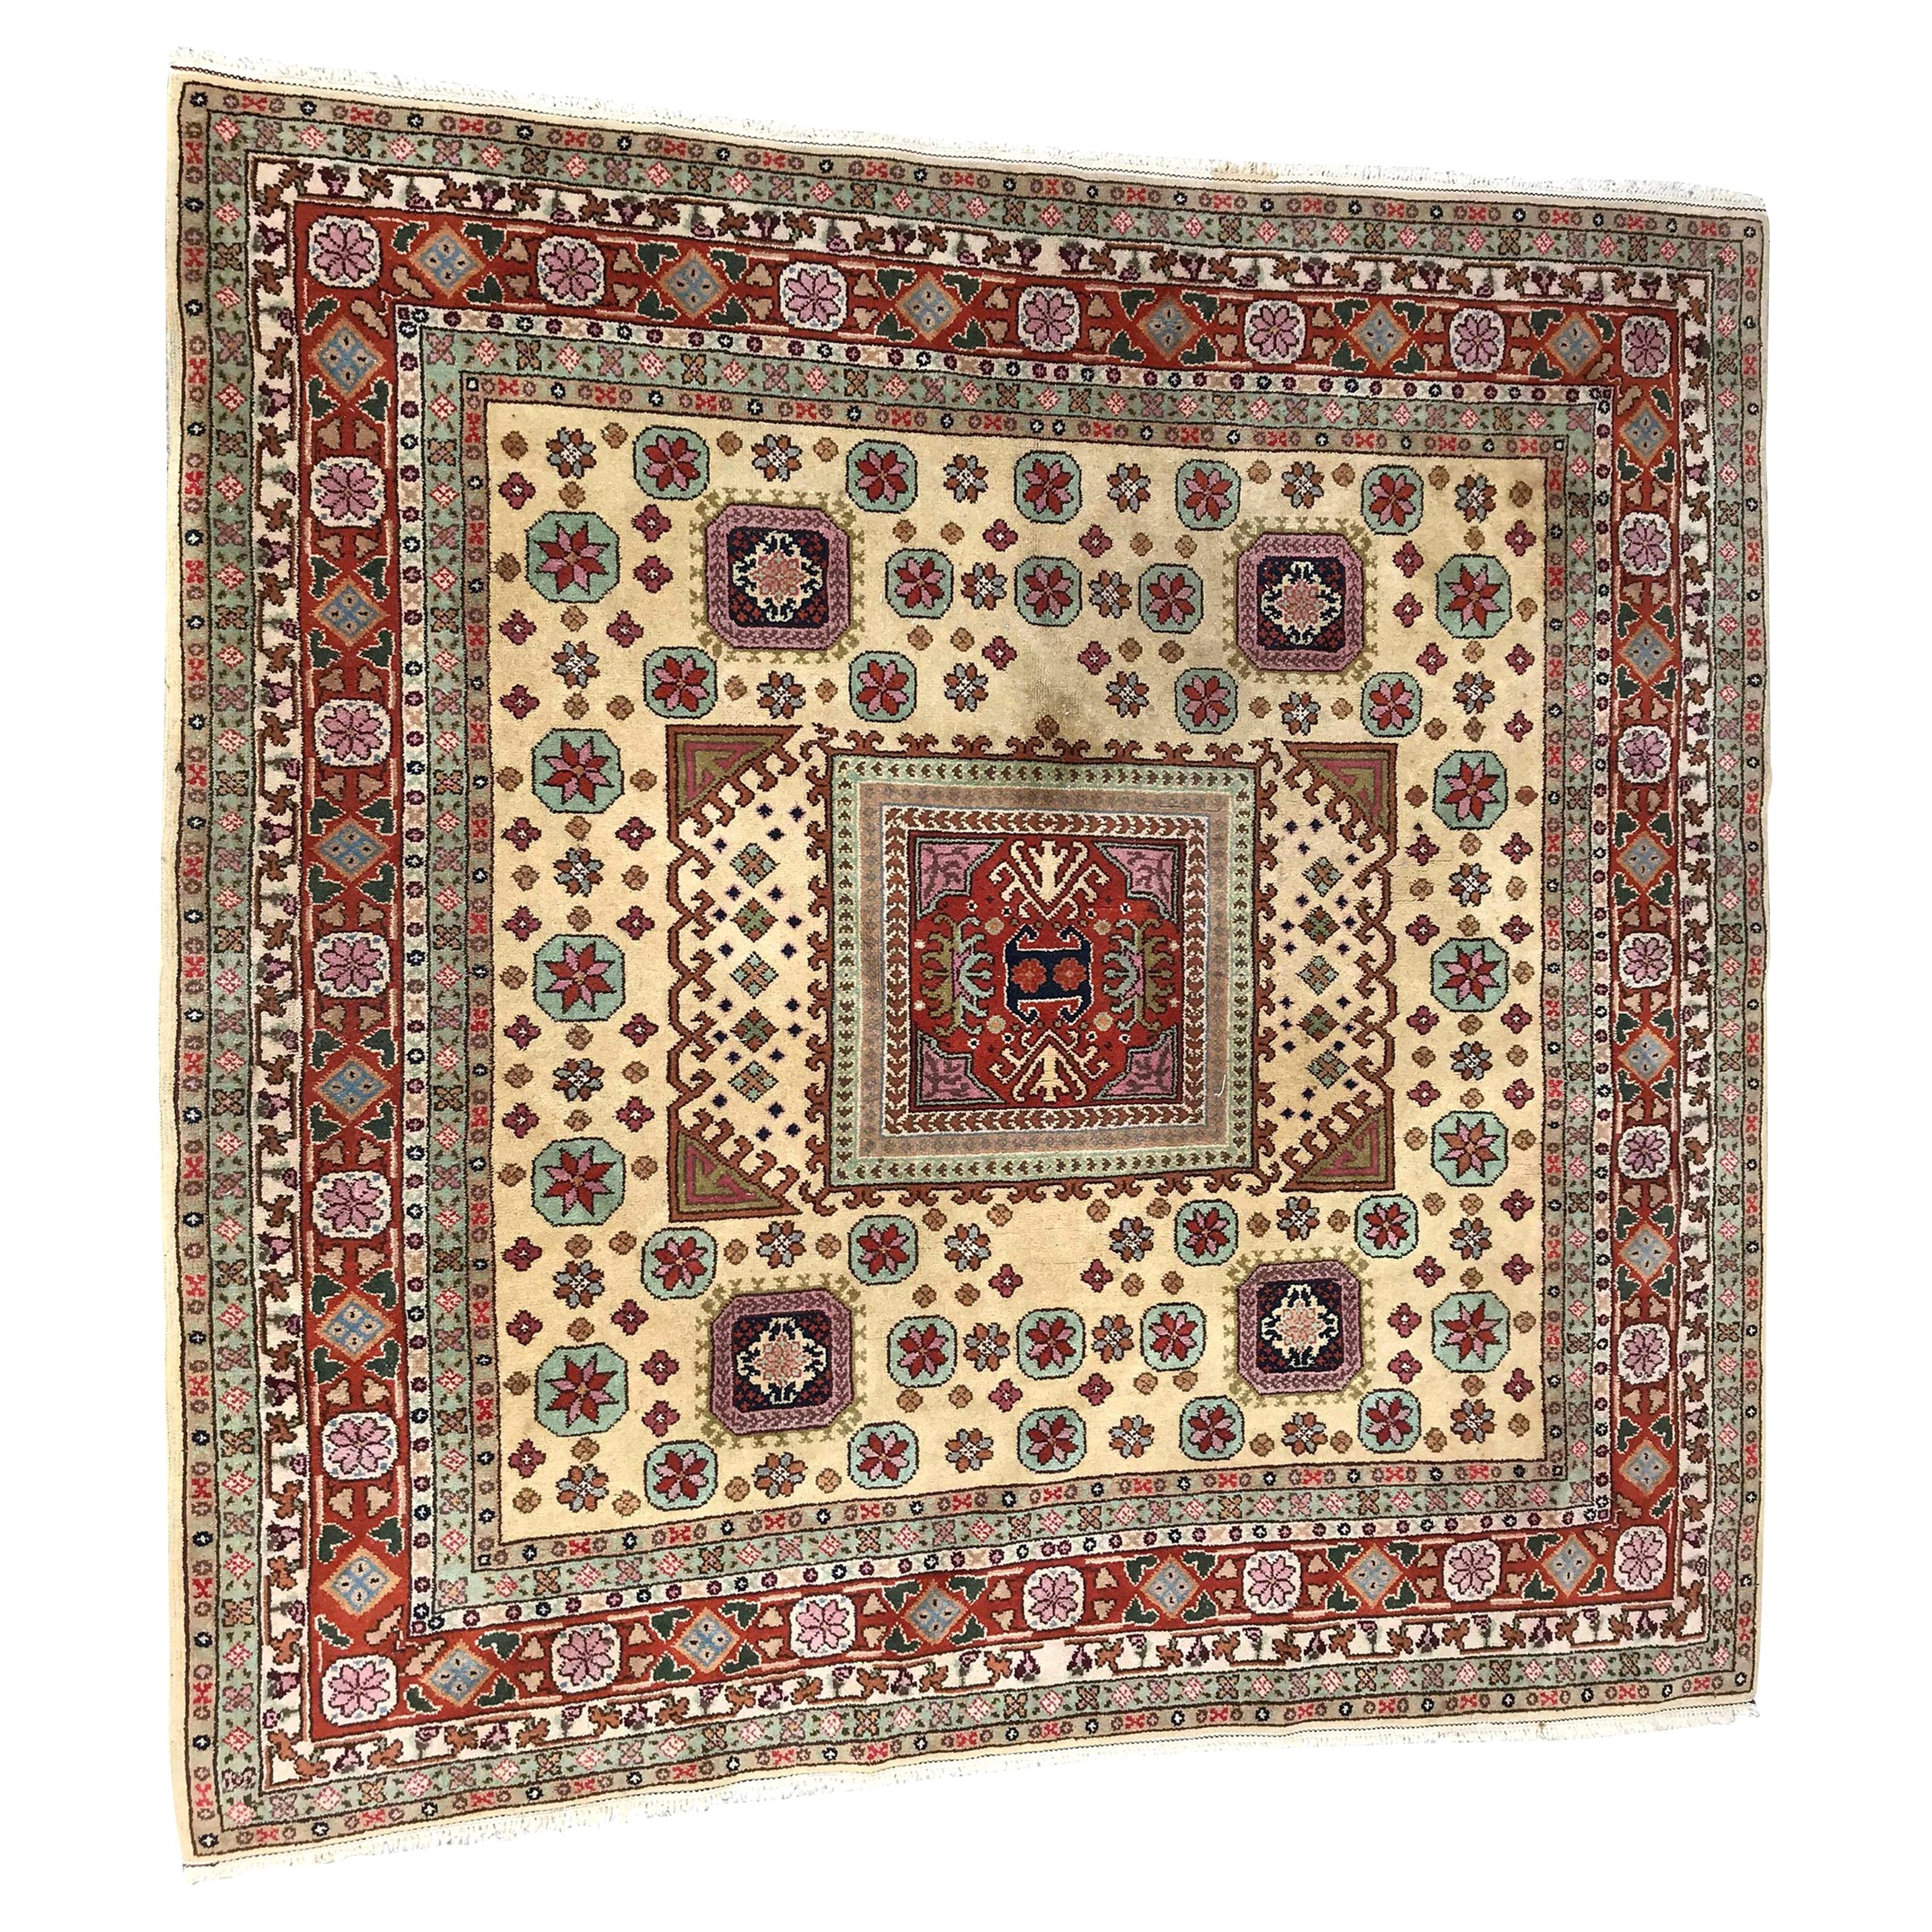 Bobyrug’s Transylvanian Square Persian Design Rug